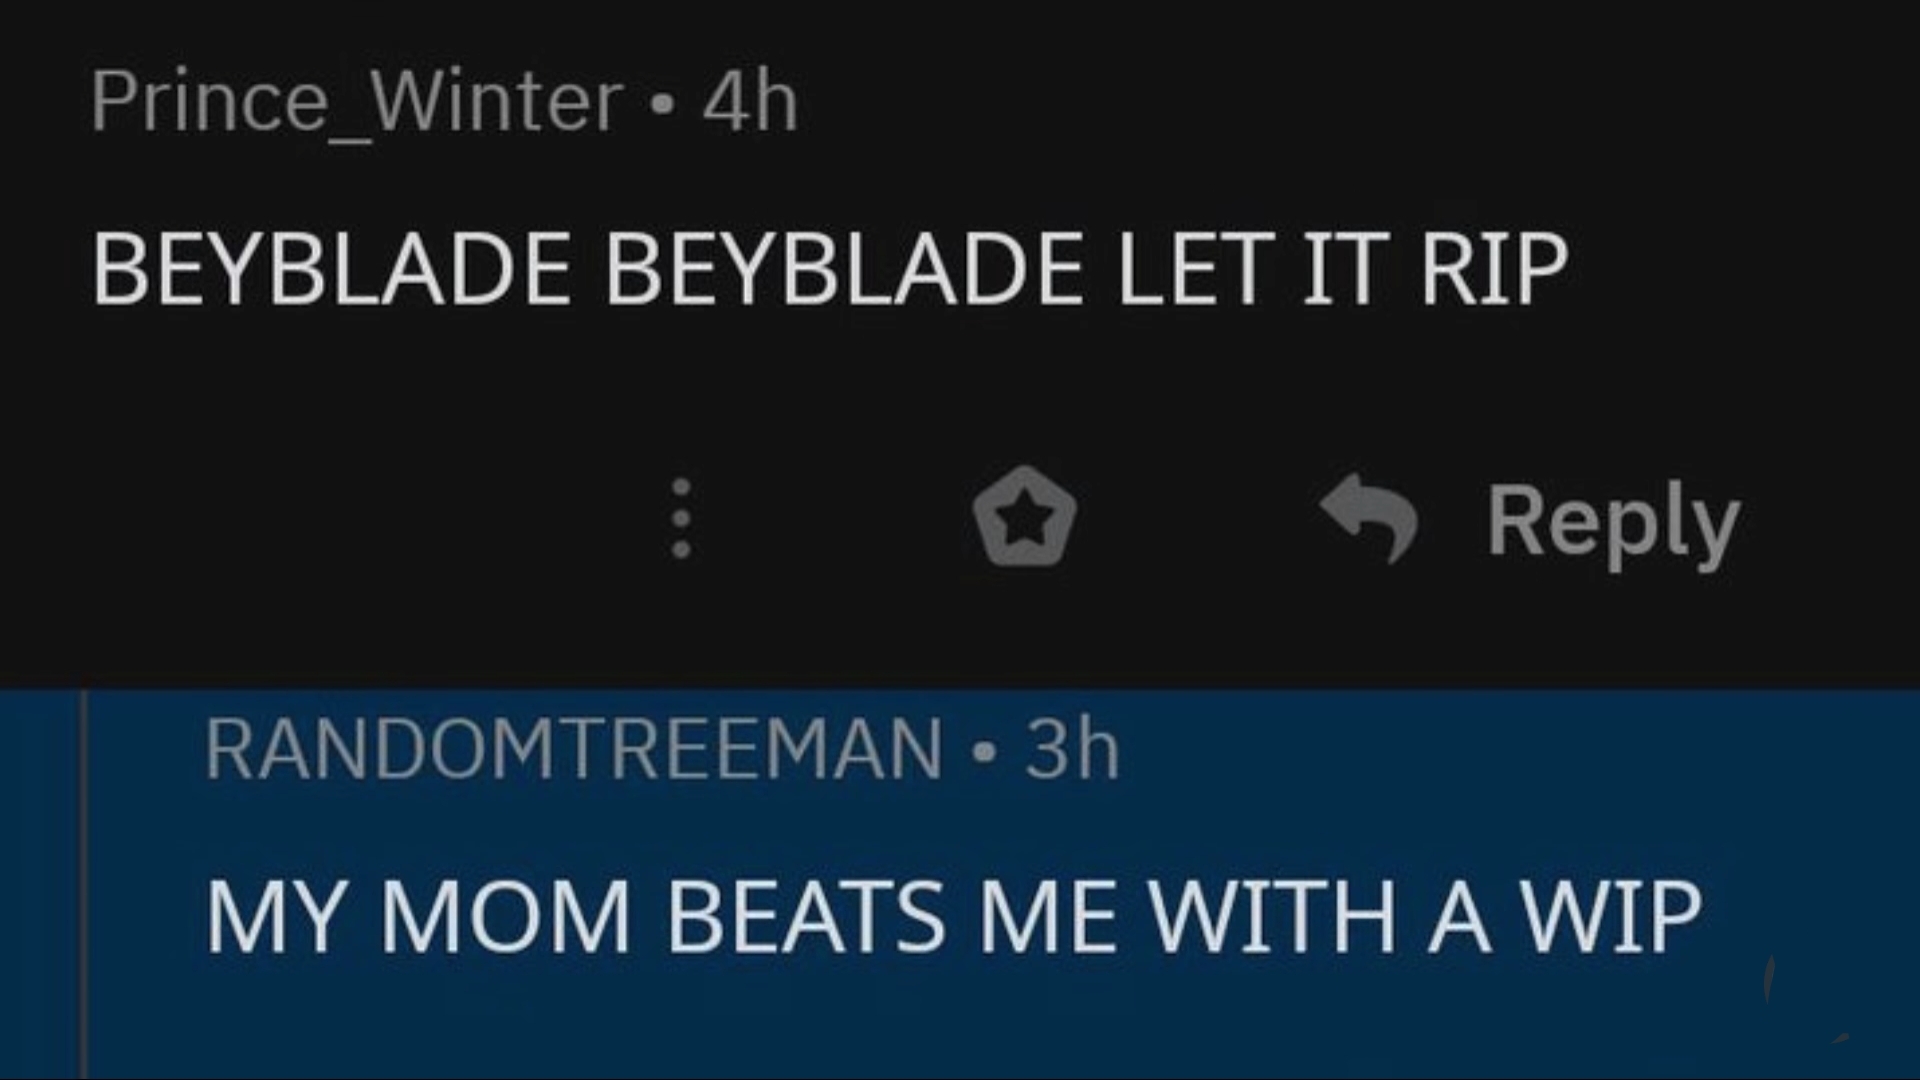 Beyblade beyblade this is shit - meme